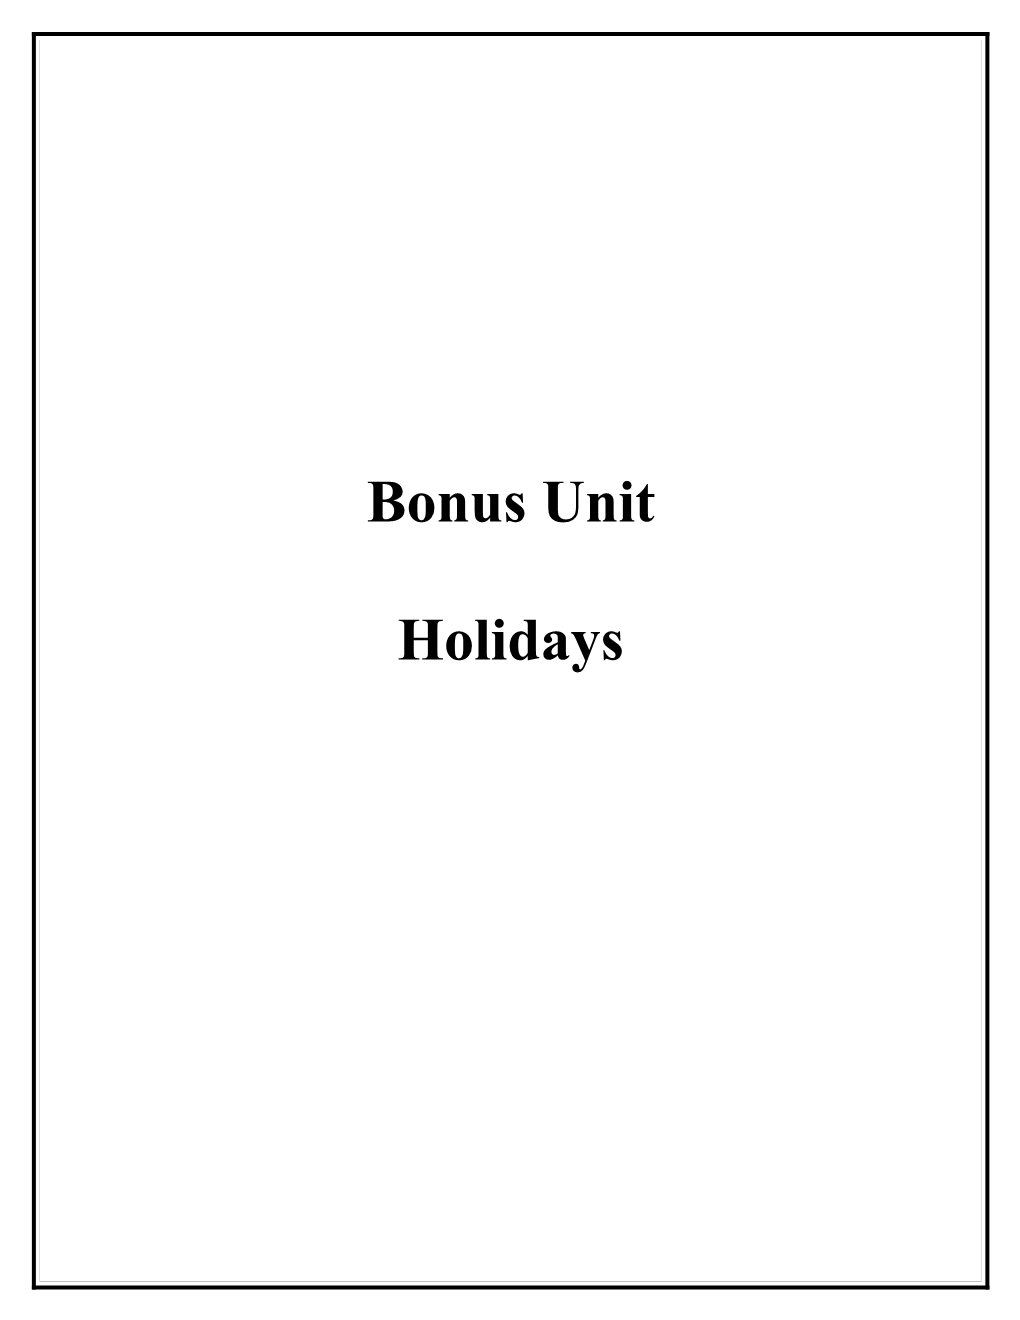 Materials for Holidays Bonus Unit